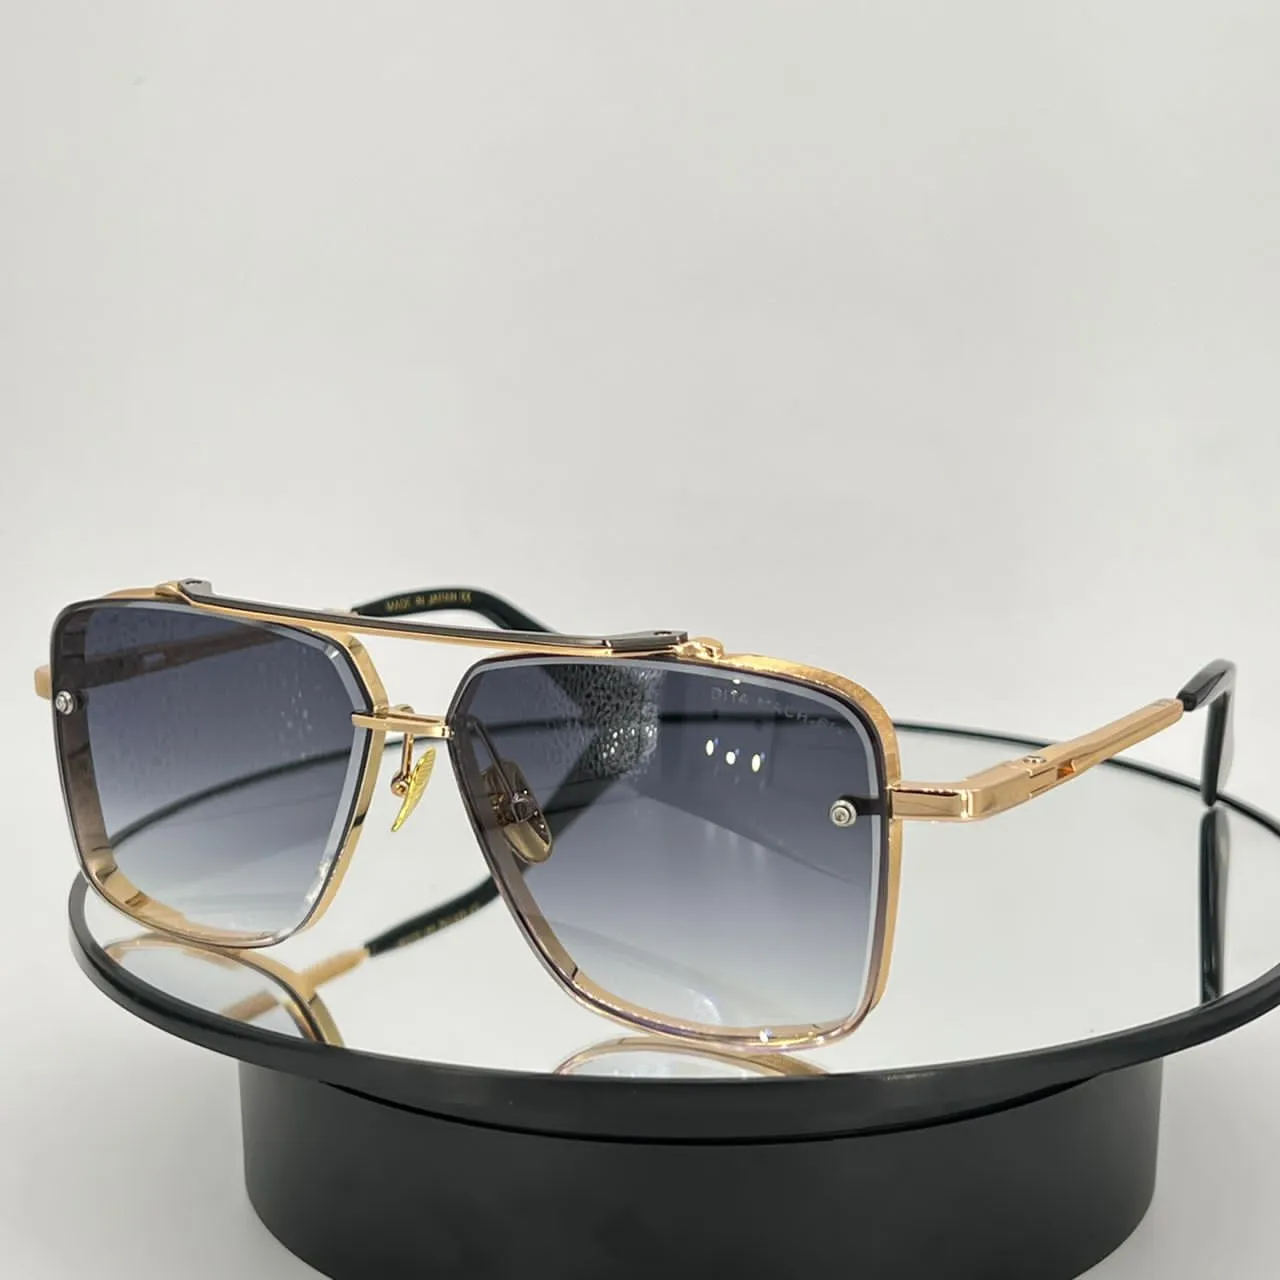 MACH SIX Summer SUNGLASSES For Men and Women Style Anti-Ultraviolet Retro Plate Square Full Frame Eyeglasses Random Box